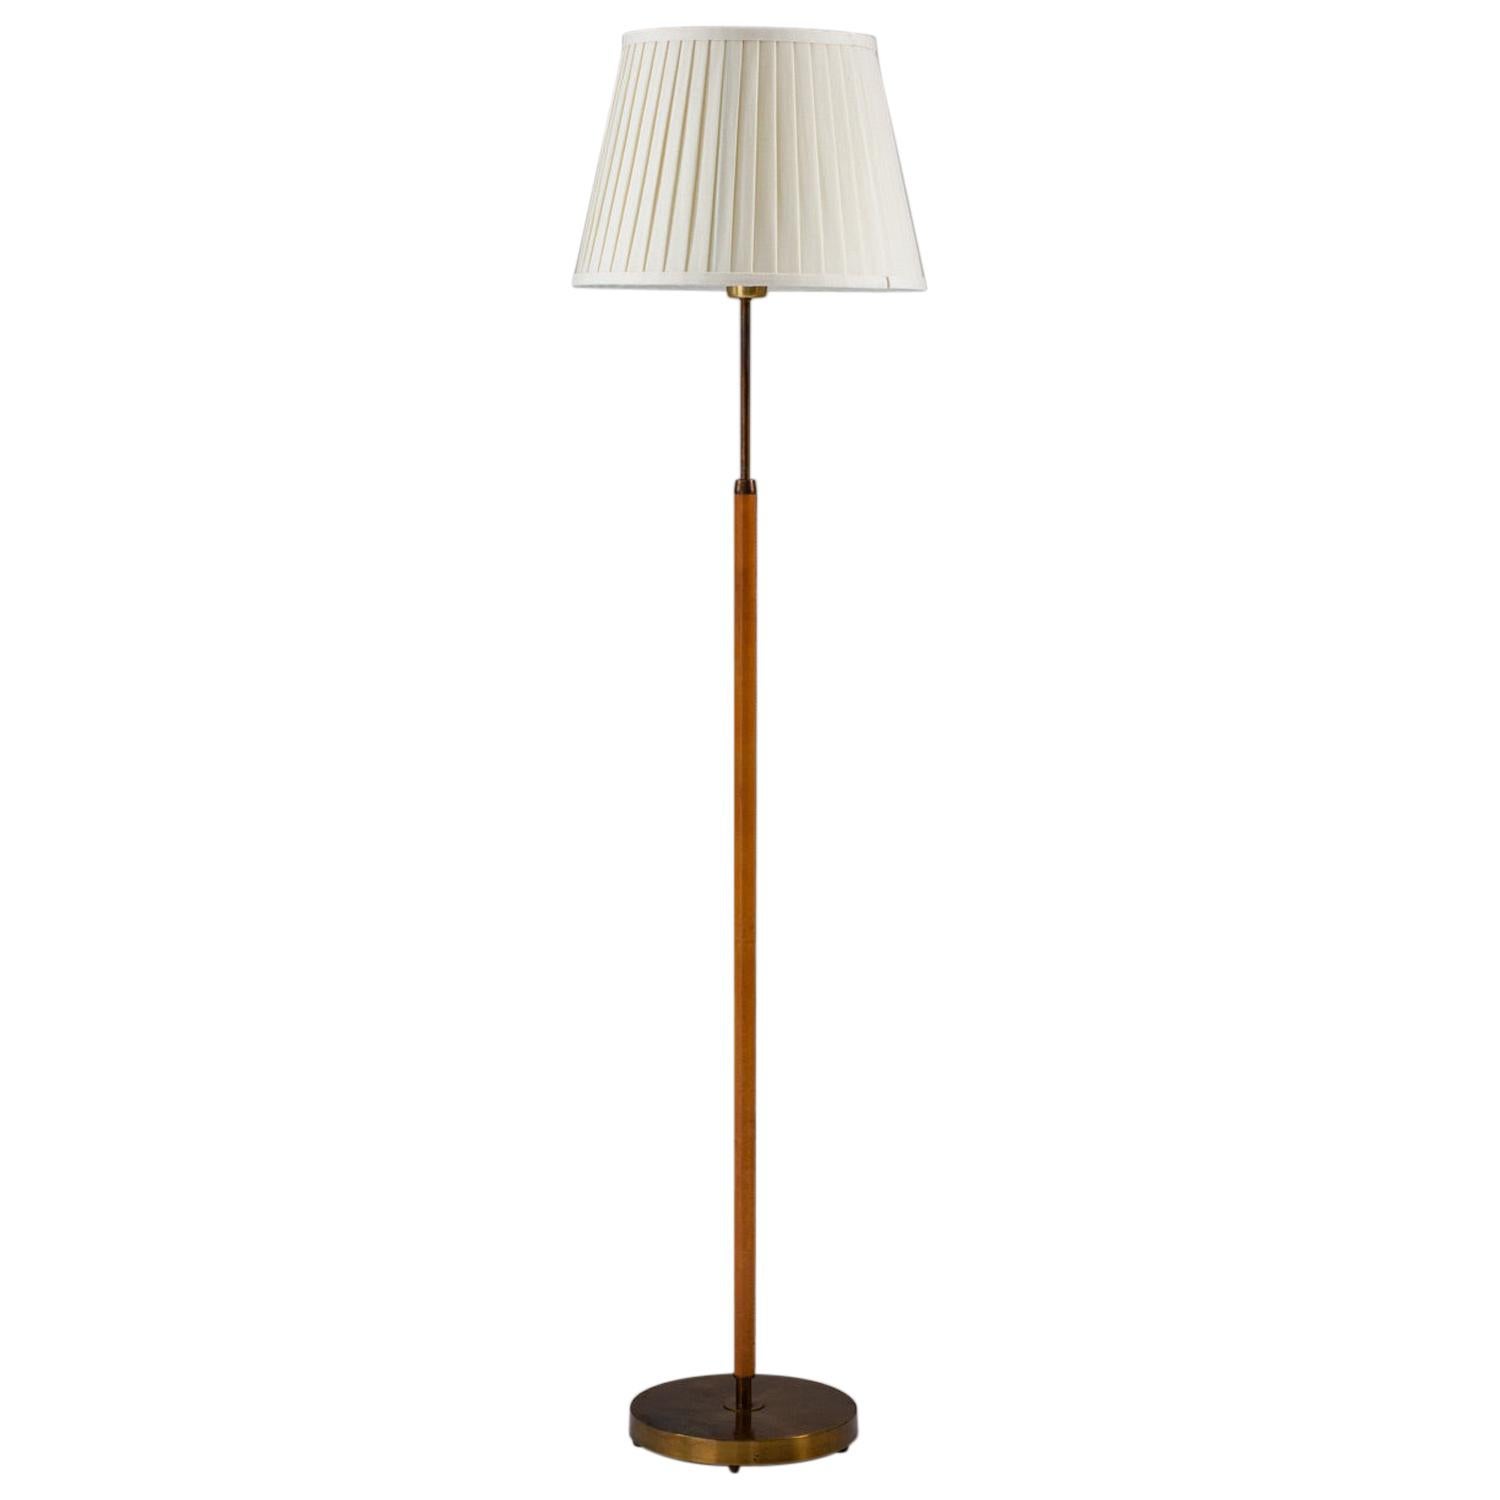 Scandinavian Midcentury Floor Lamp in Brass and Leather by Falkenbergs, Sweden